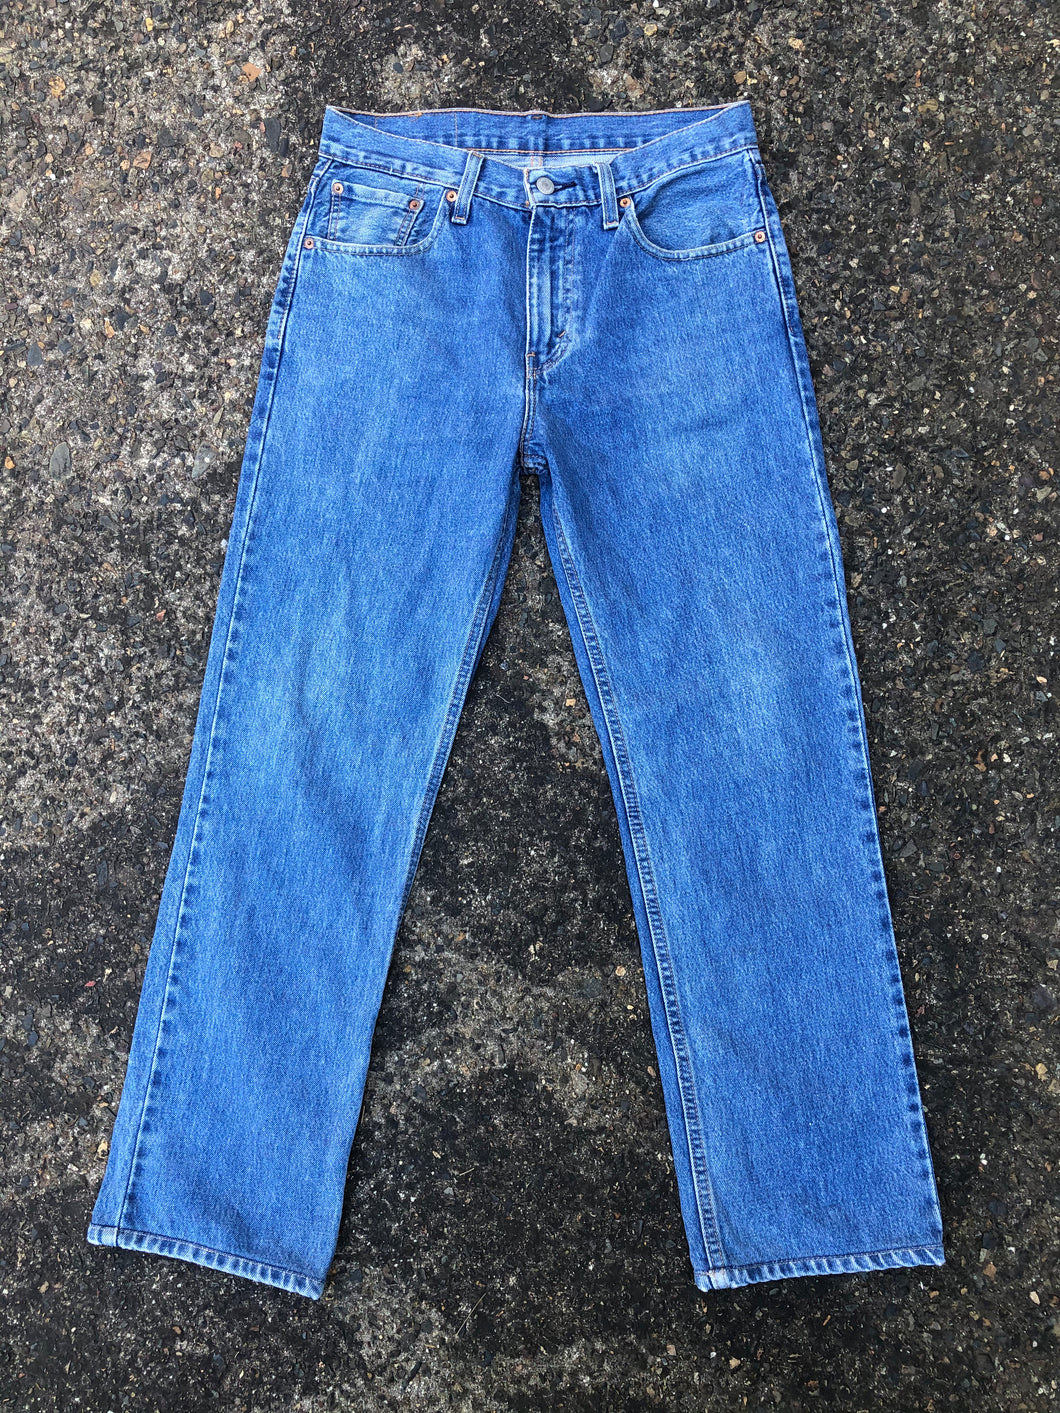 Vintage 516 Denim Levi's Jeans Size 10-12 (31”) – The Restoration Outlet